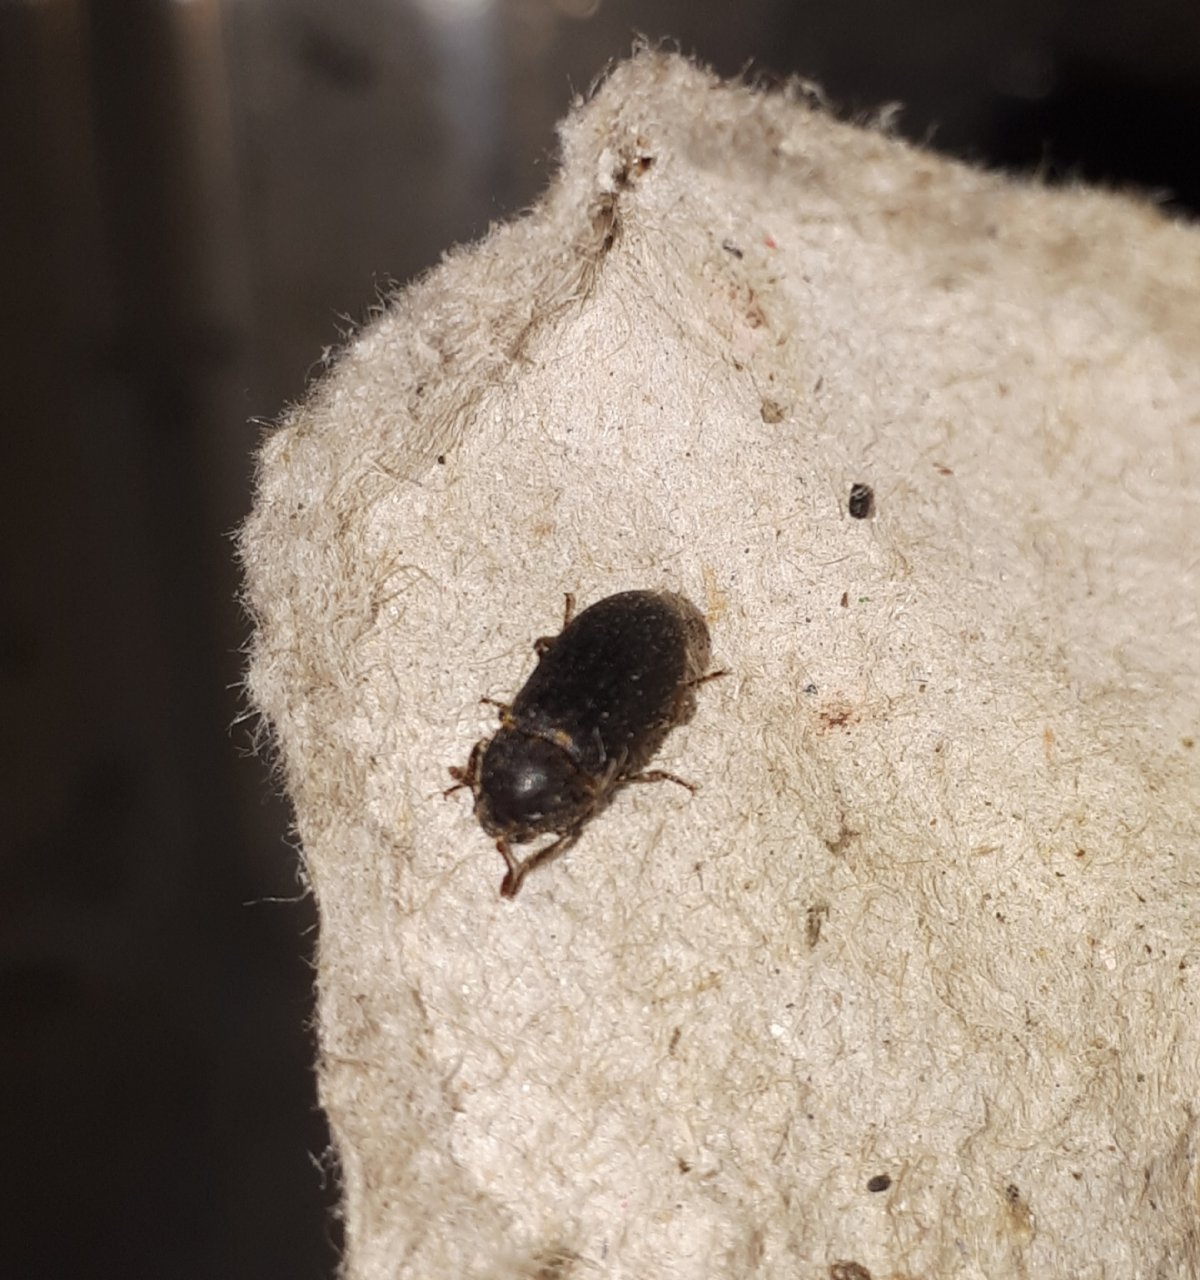 Beetle identification